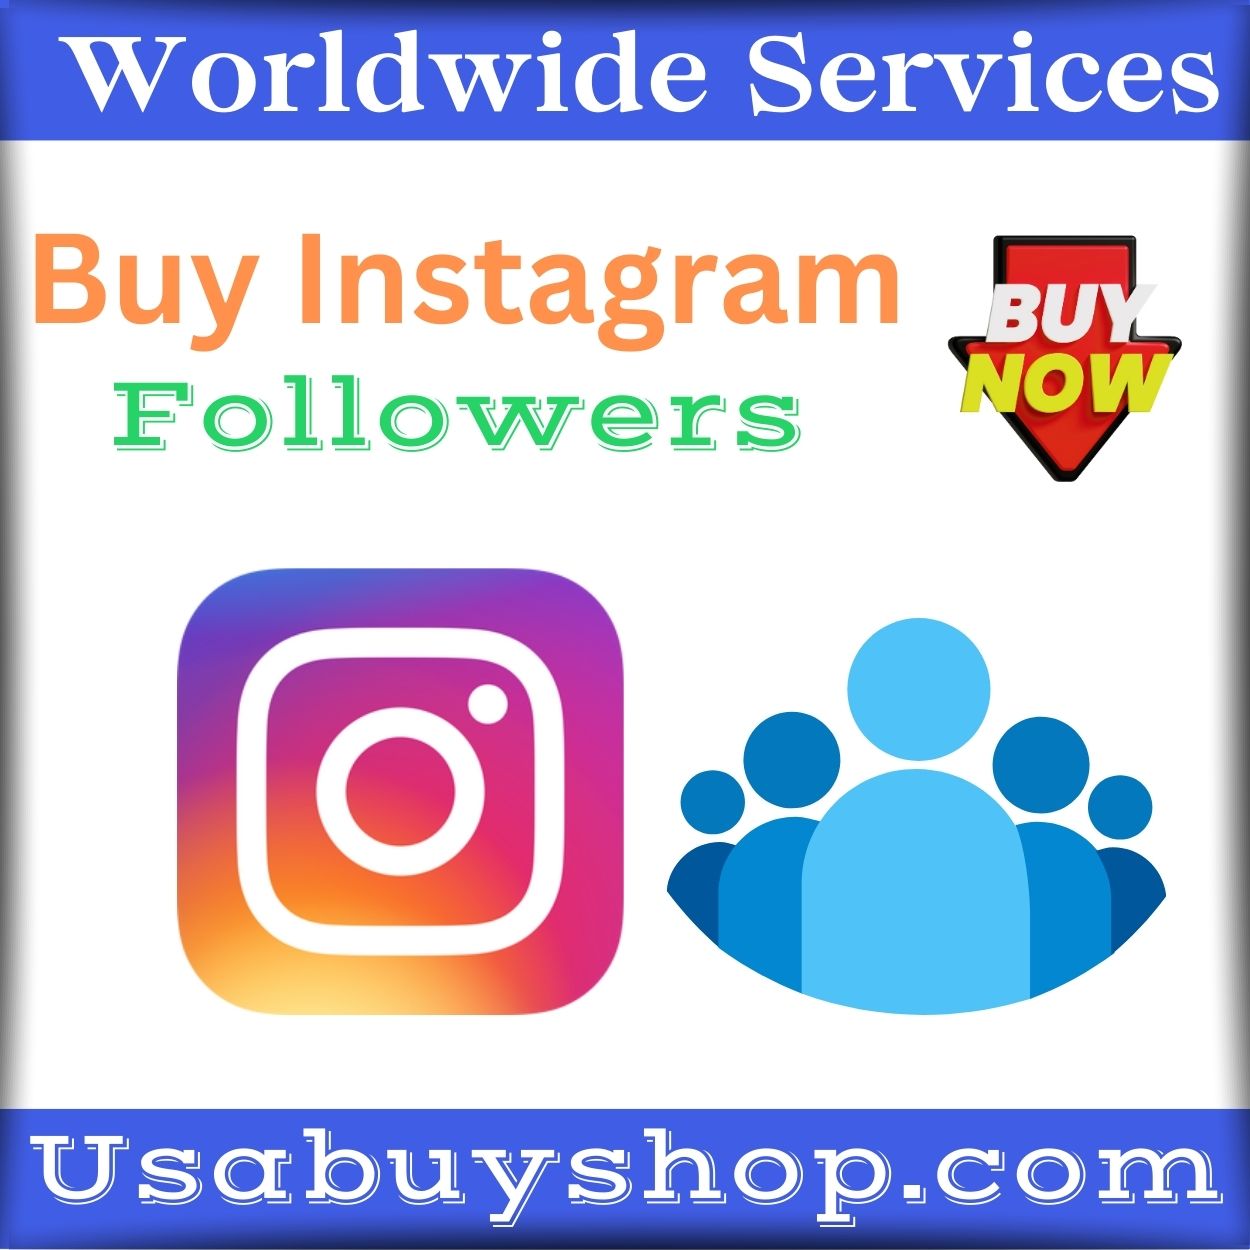 Buy Instagram Followers - 100% Real Followers Cheap Rate